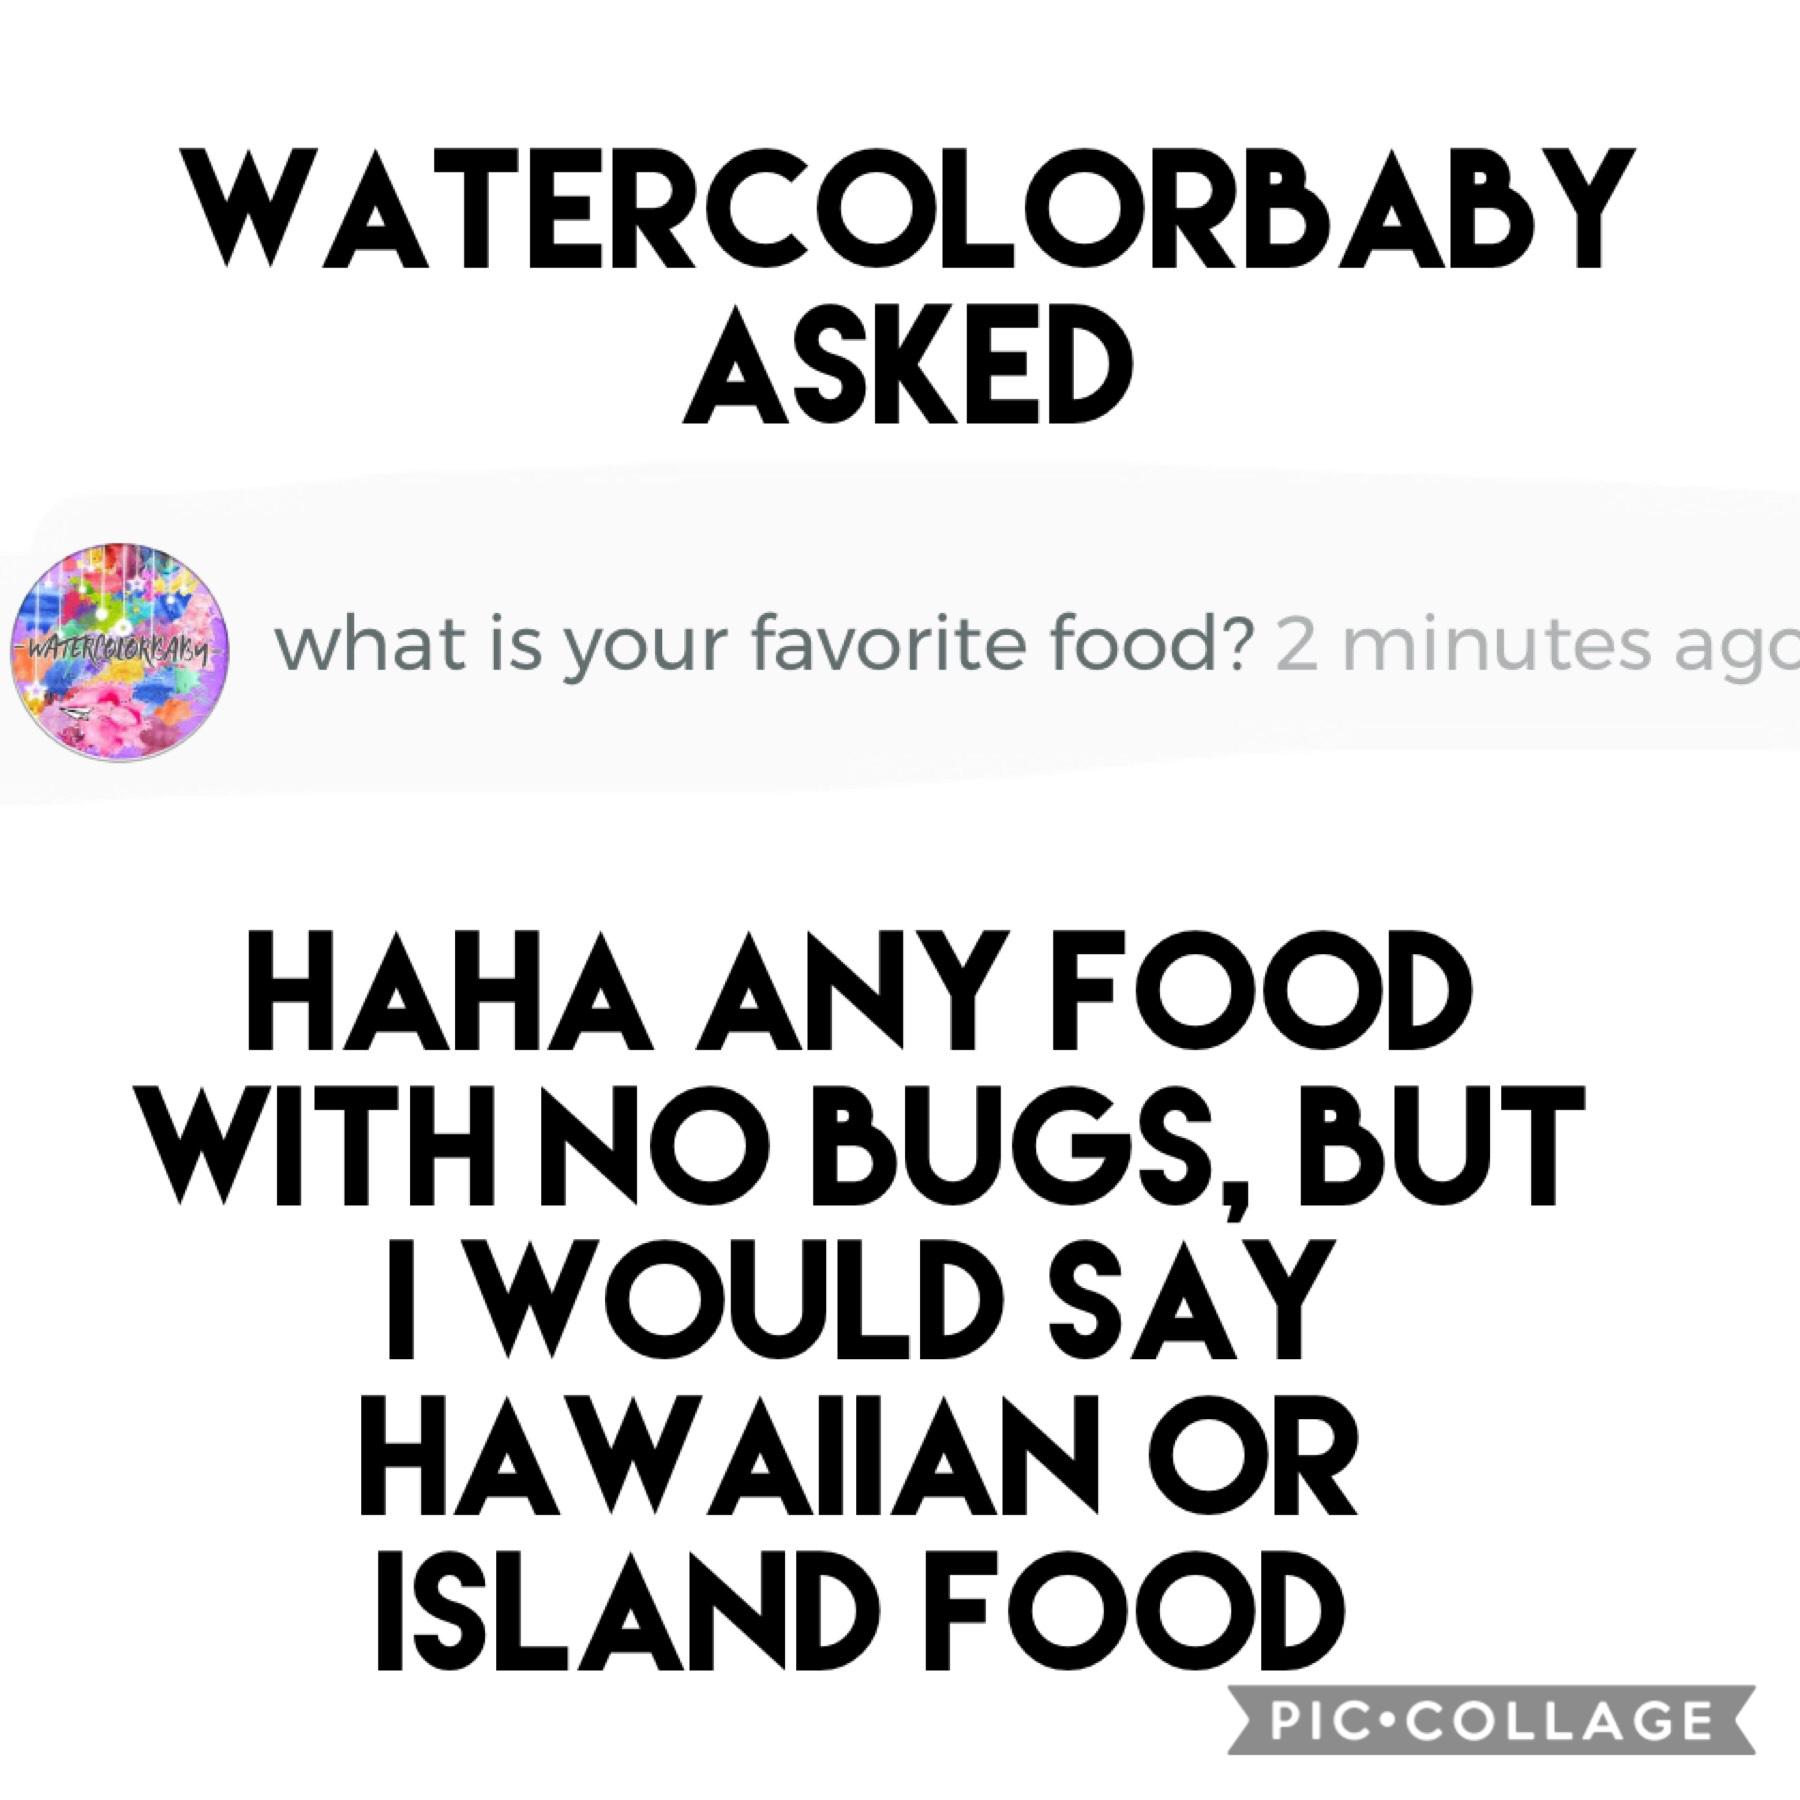 Q&A I don’t think I spelled Hawaiian right but whatever haha